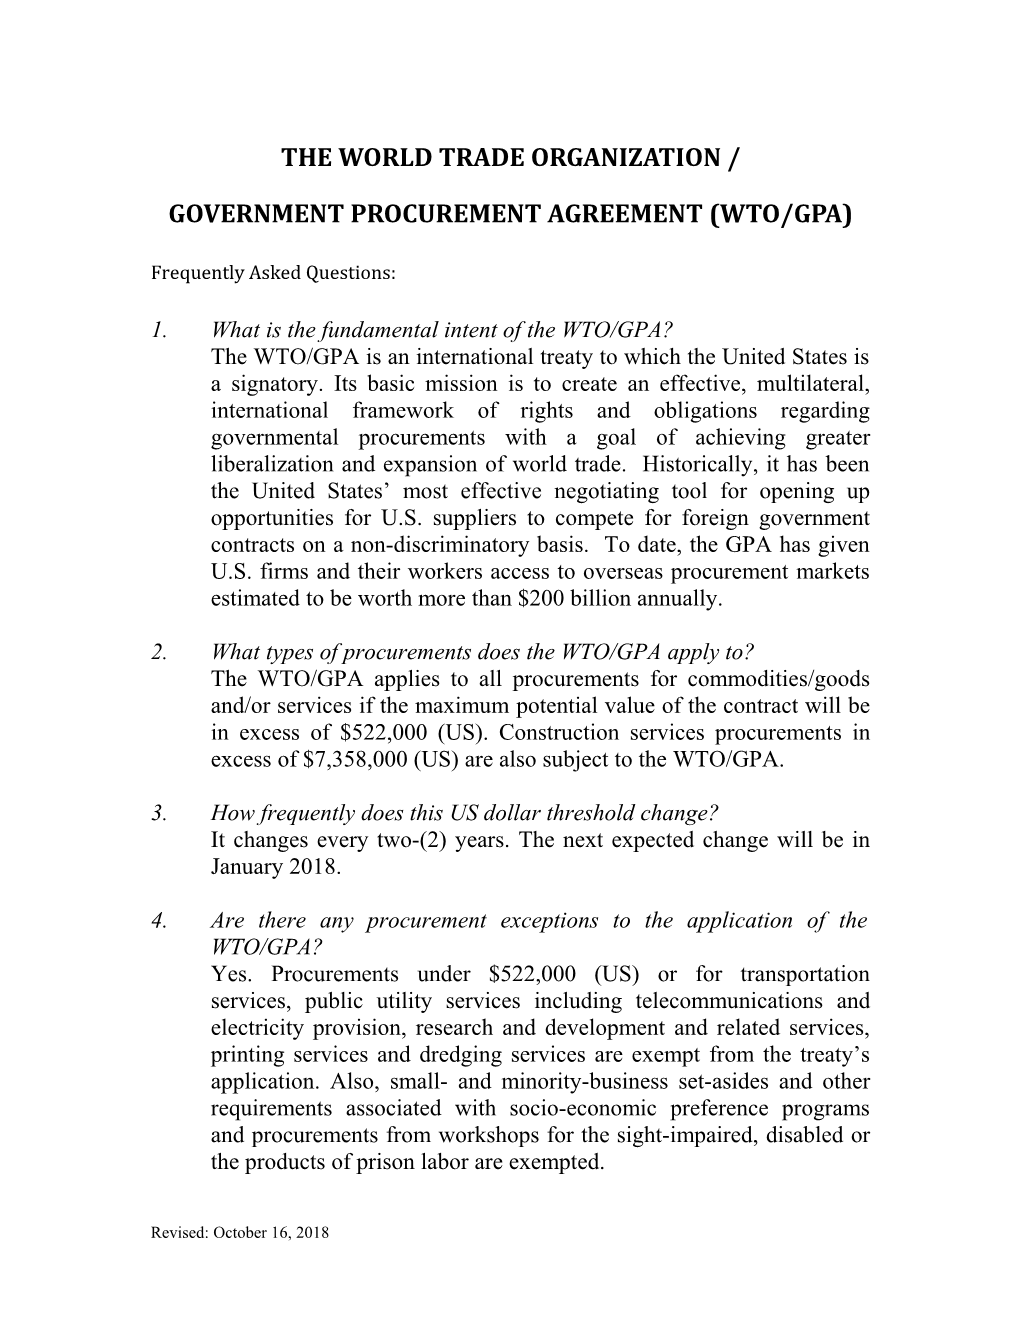 The World Trade Organization Government Procurement Agreement (WTO/GPA)